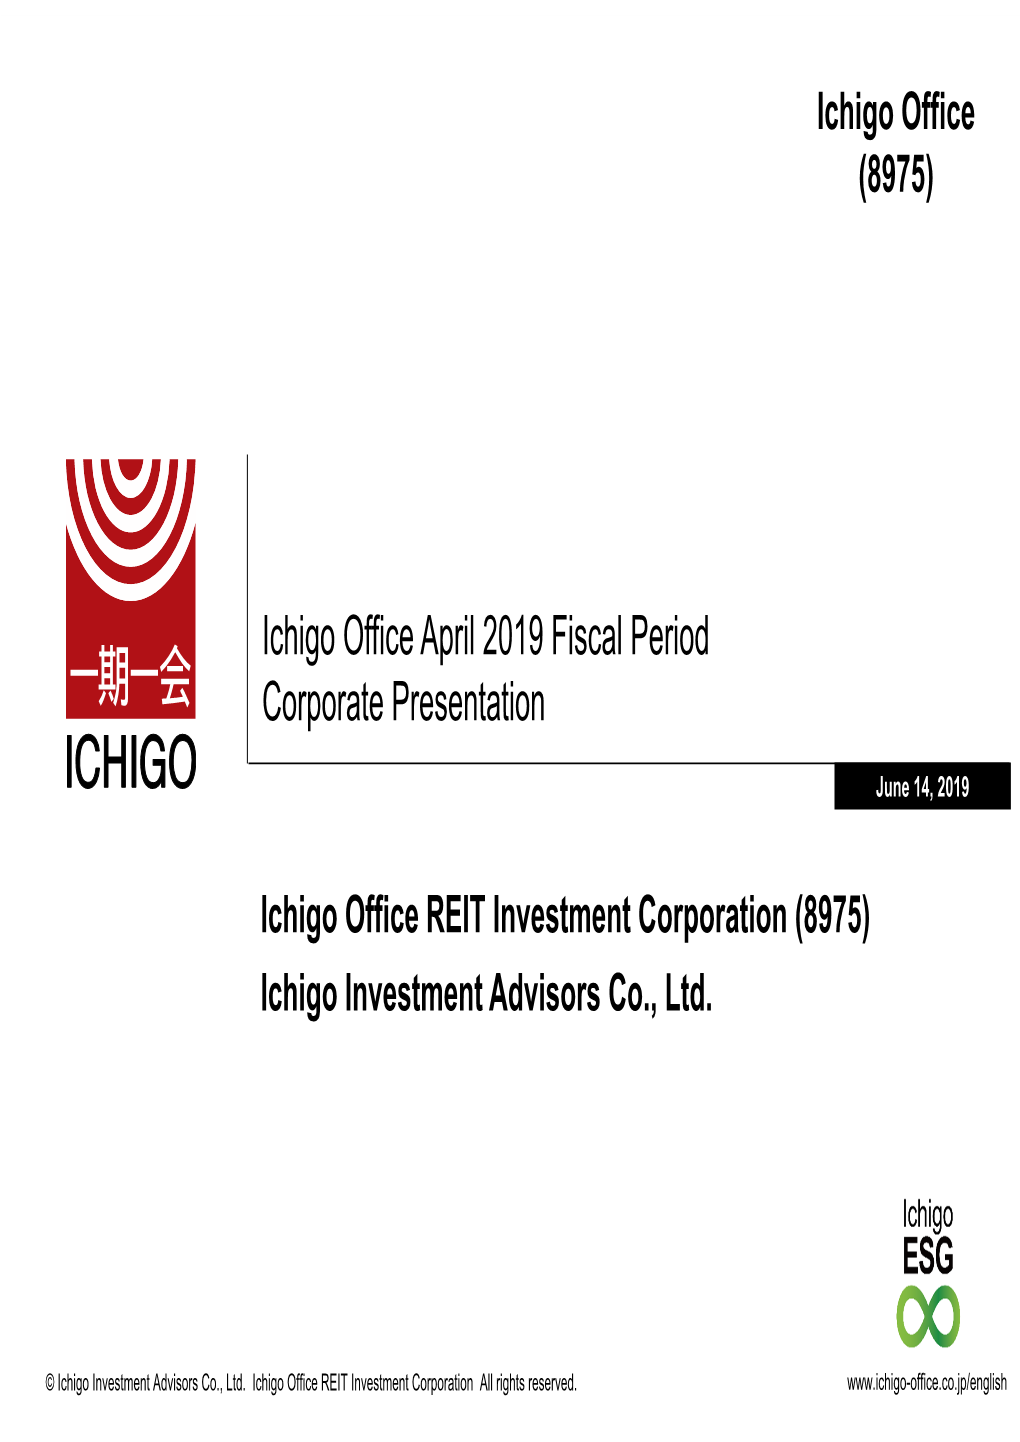 Ichigo Office April 2019 Fiscal Period Corporate Presentation